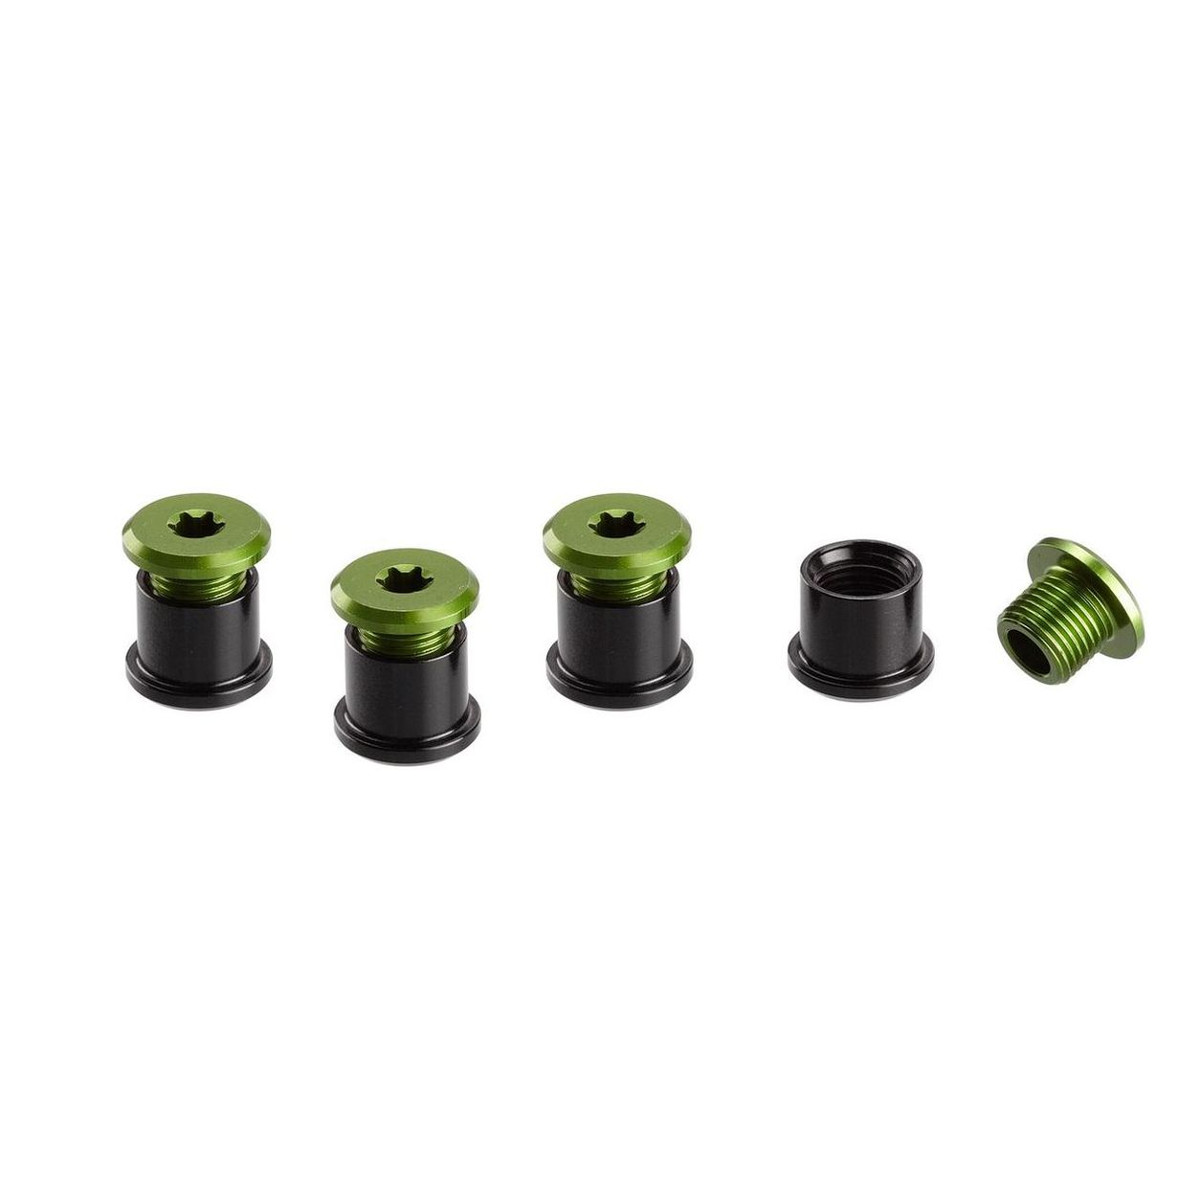 E*thirteen Kit Viti Corona  Verde, Alluminio, T25 6 mm Screws/ T30 7,5 mm Nuts, 4 Pz each